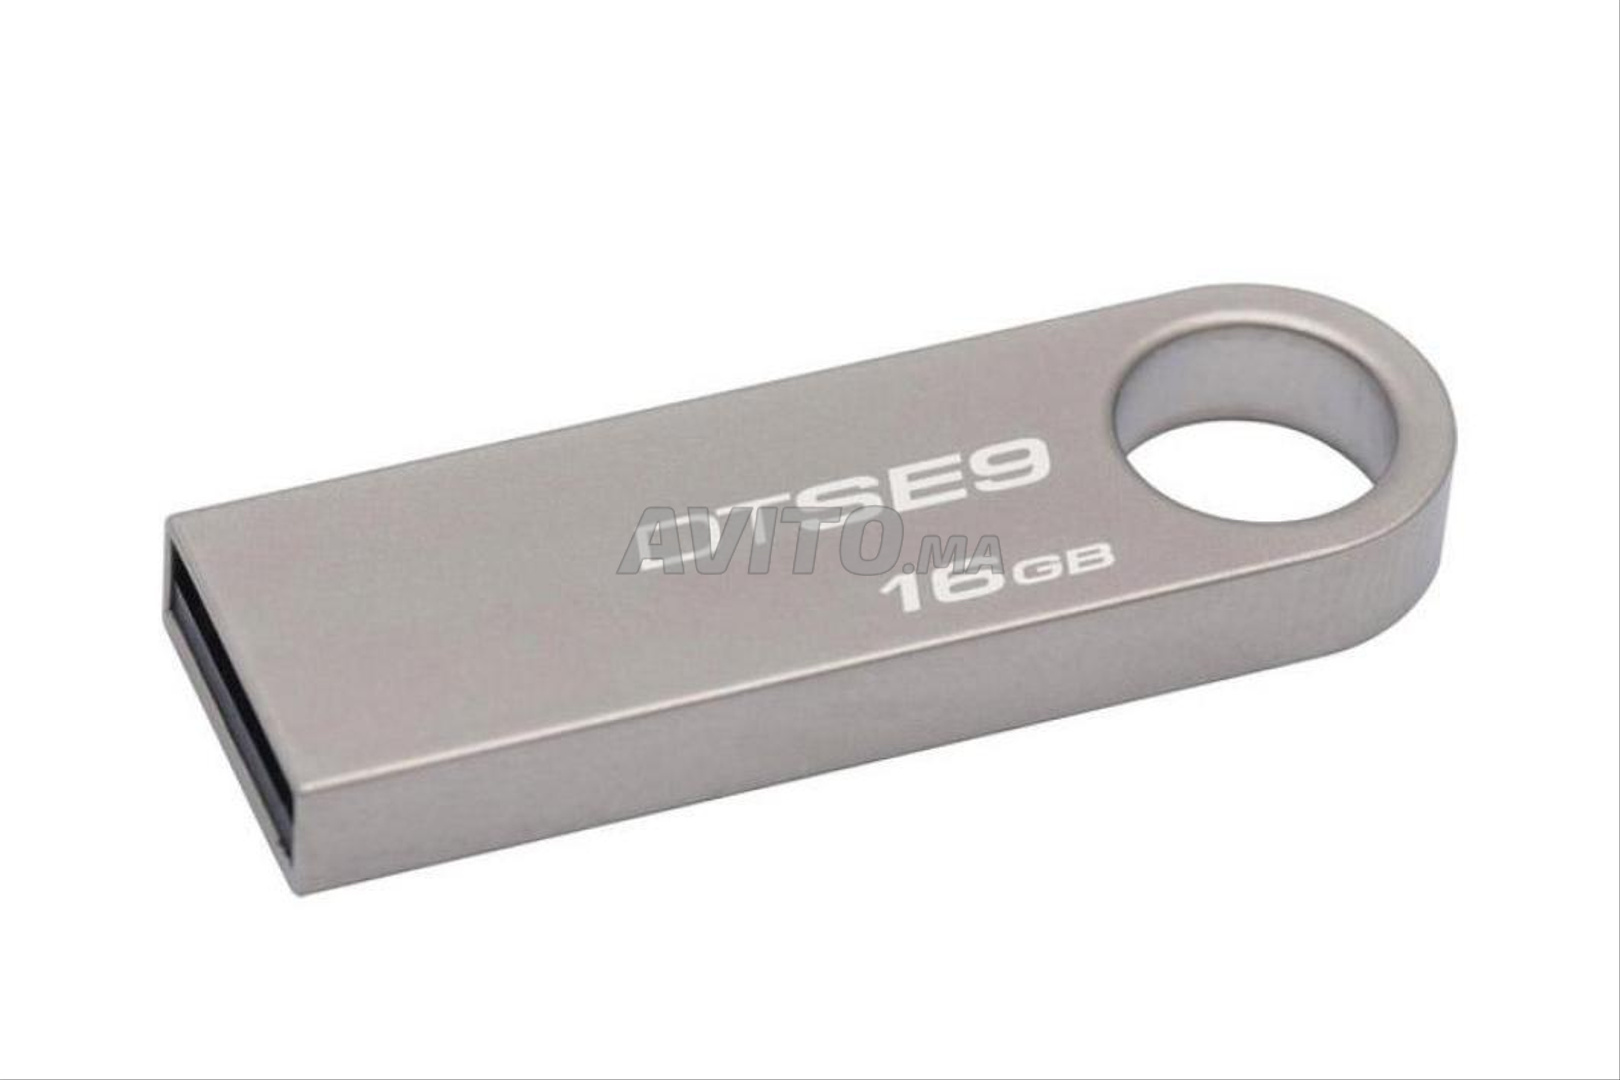 Clé USB Kingston 16 Go DataTraveler SE9 - 1